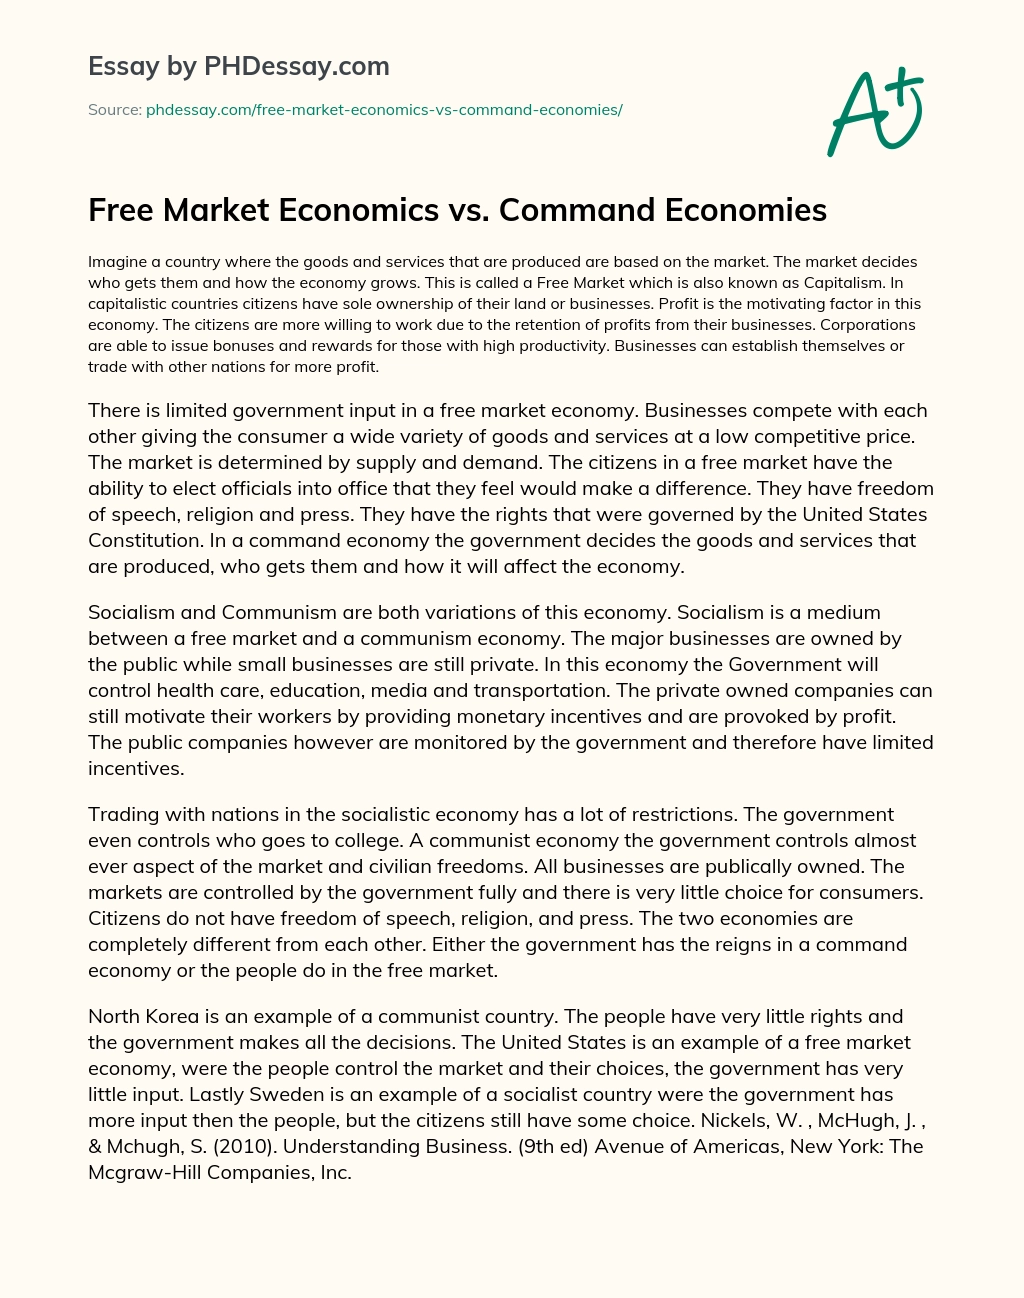 Free Market Economics vs. Command Economies essay